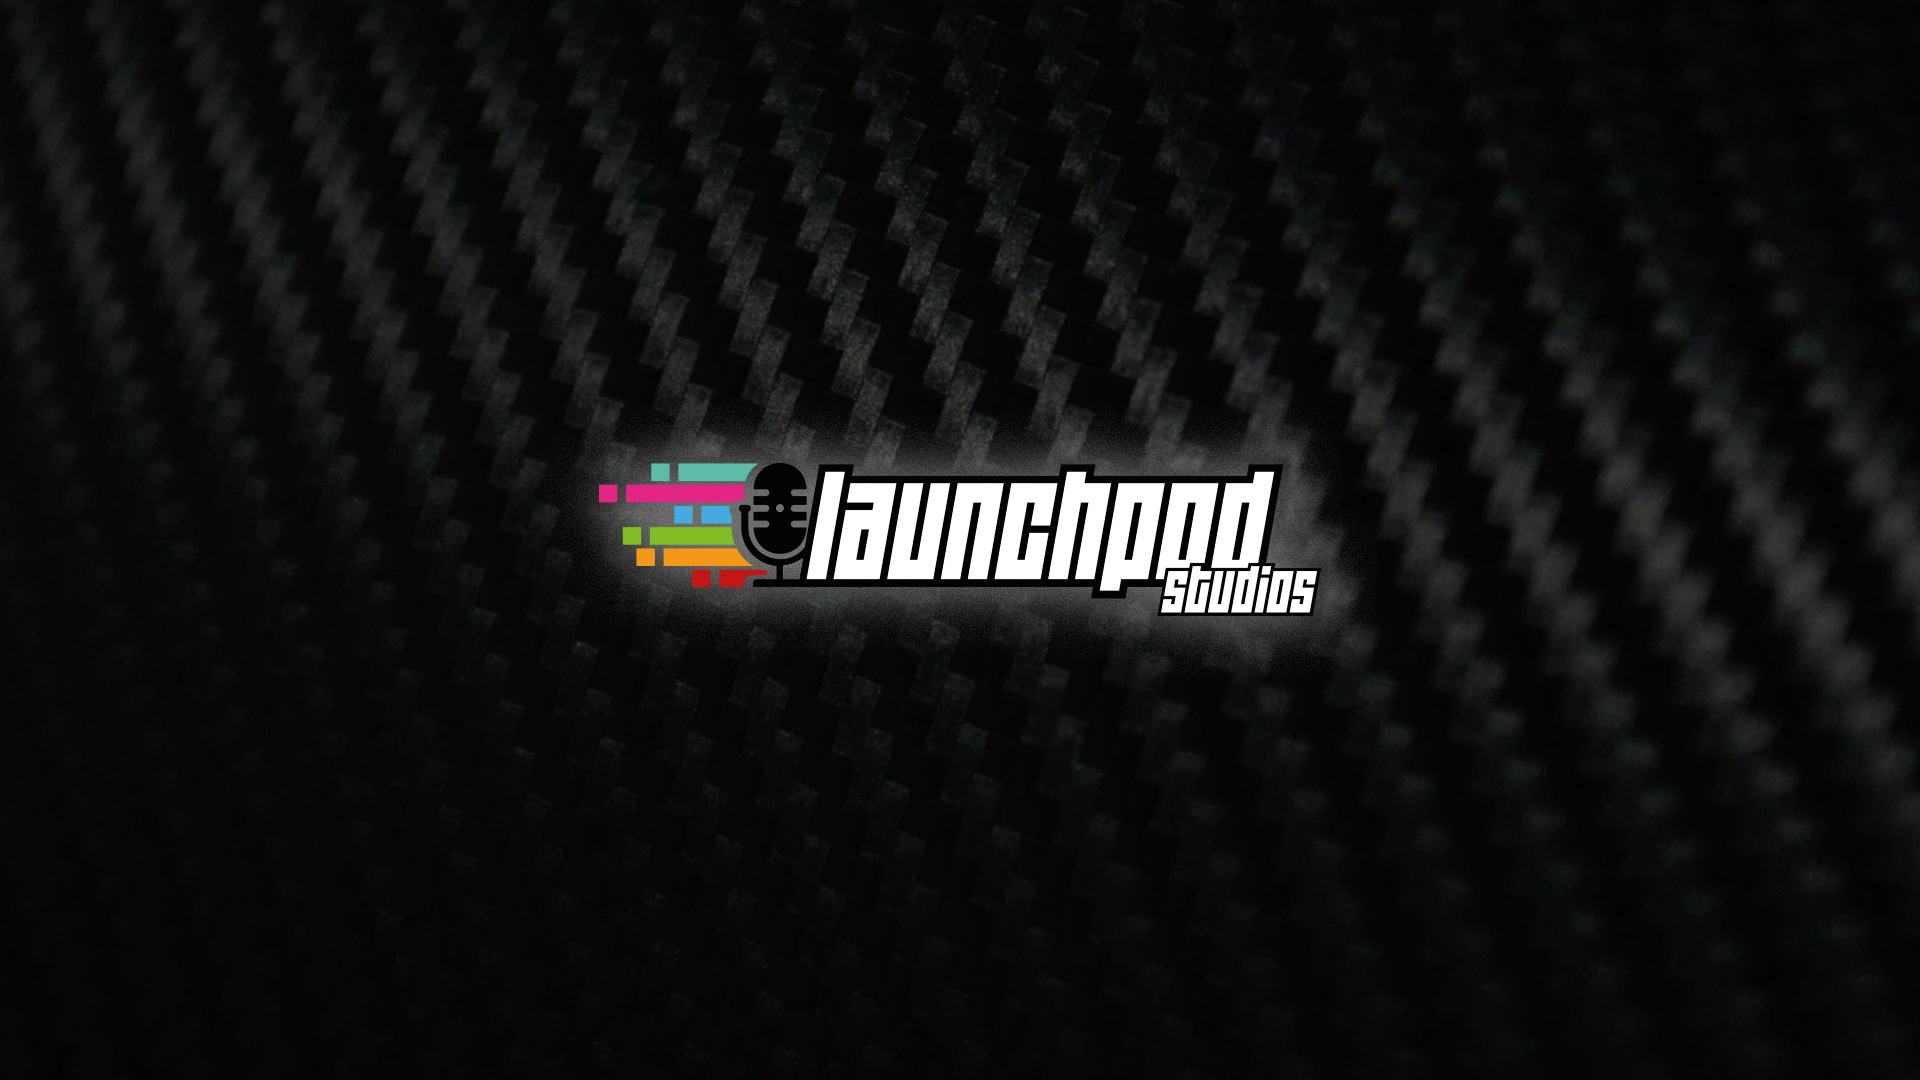 LaunchPod Studios